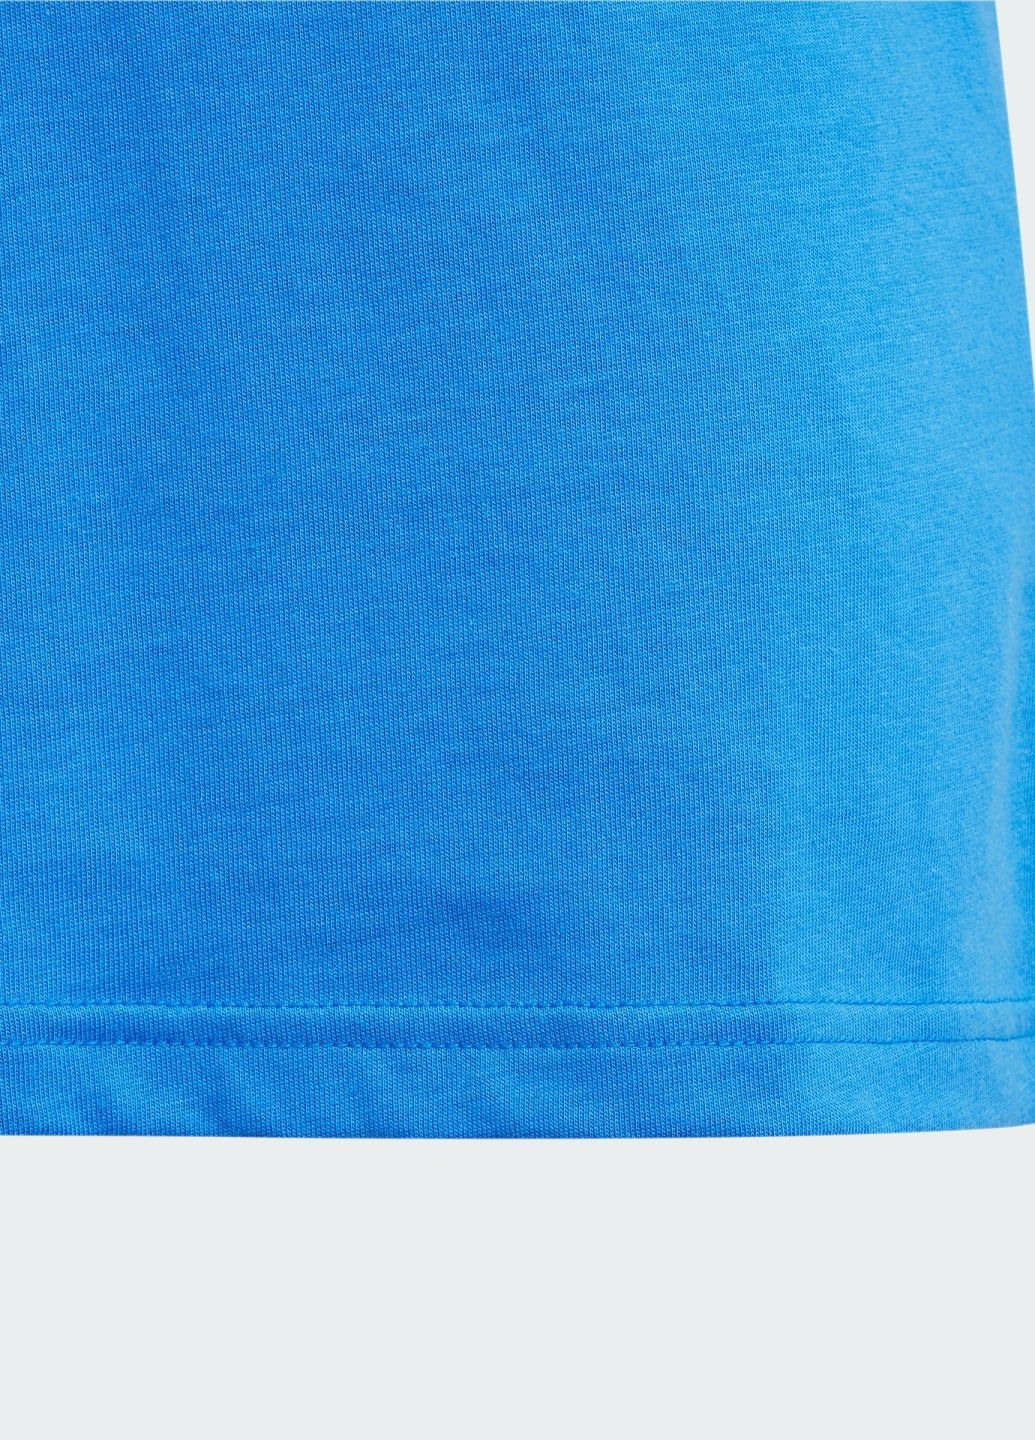 Синяя демисезонная футболка italy kids adidas